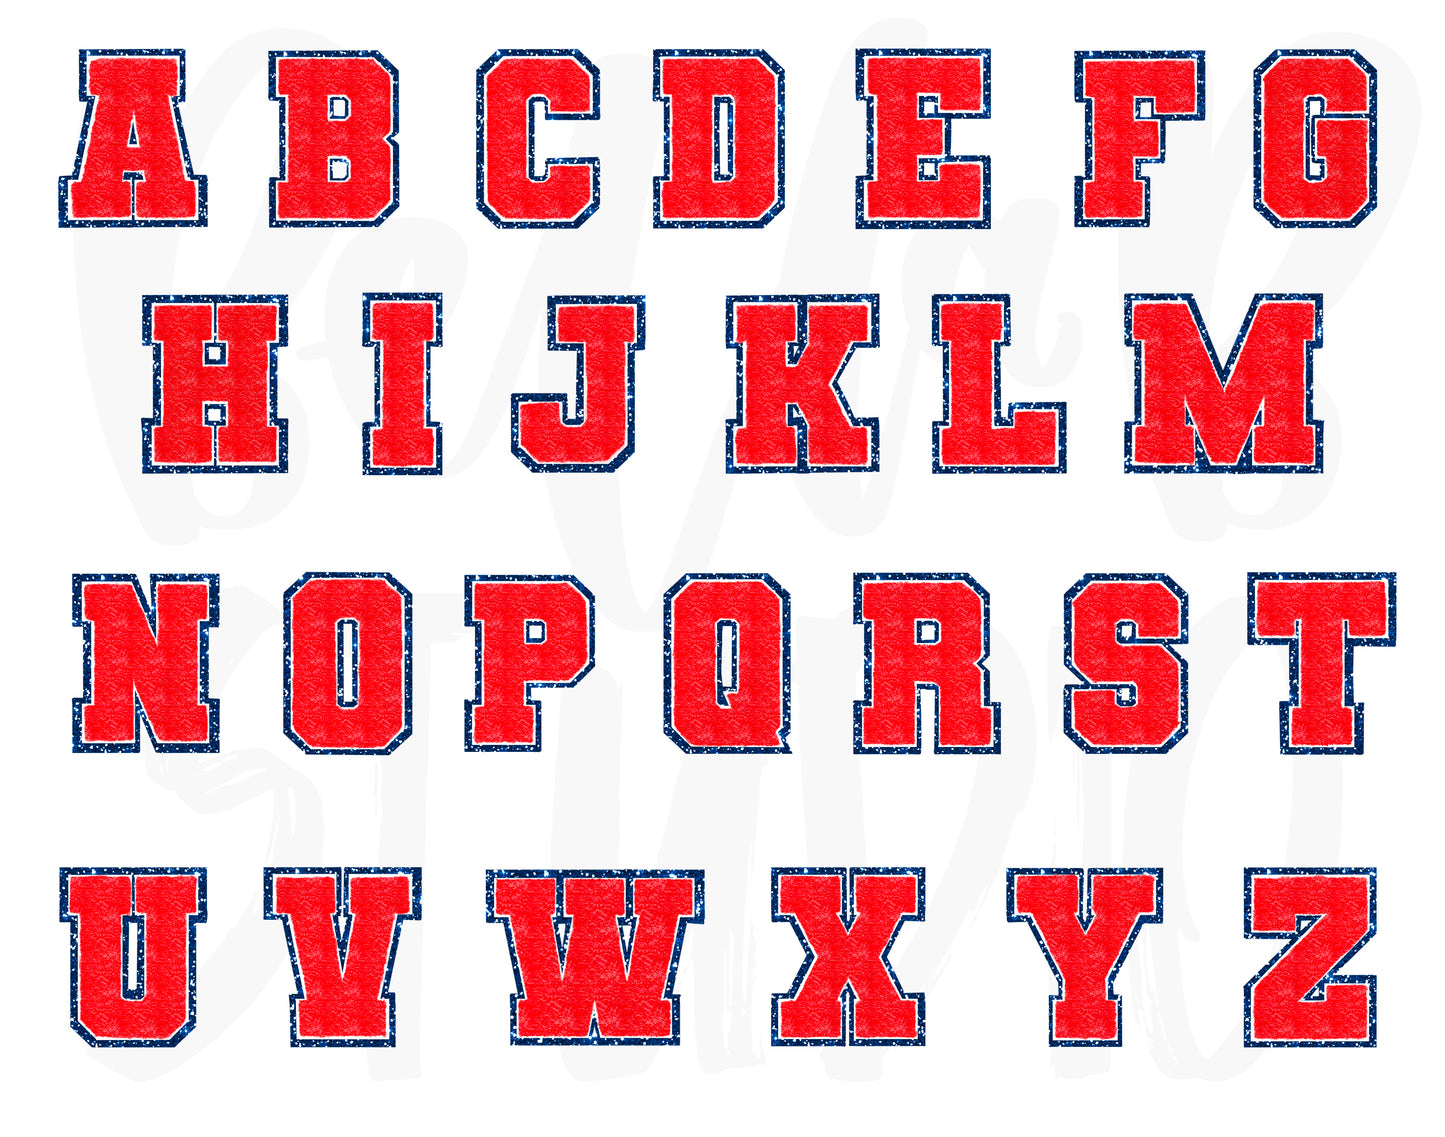 Faux Chenille Alphabet Set RED - NAVY GLITTER